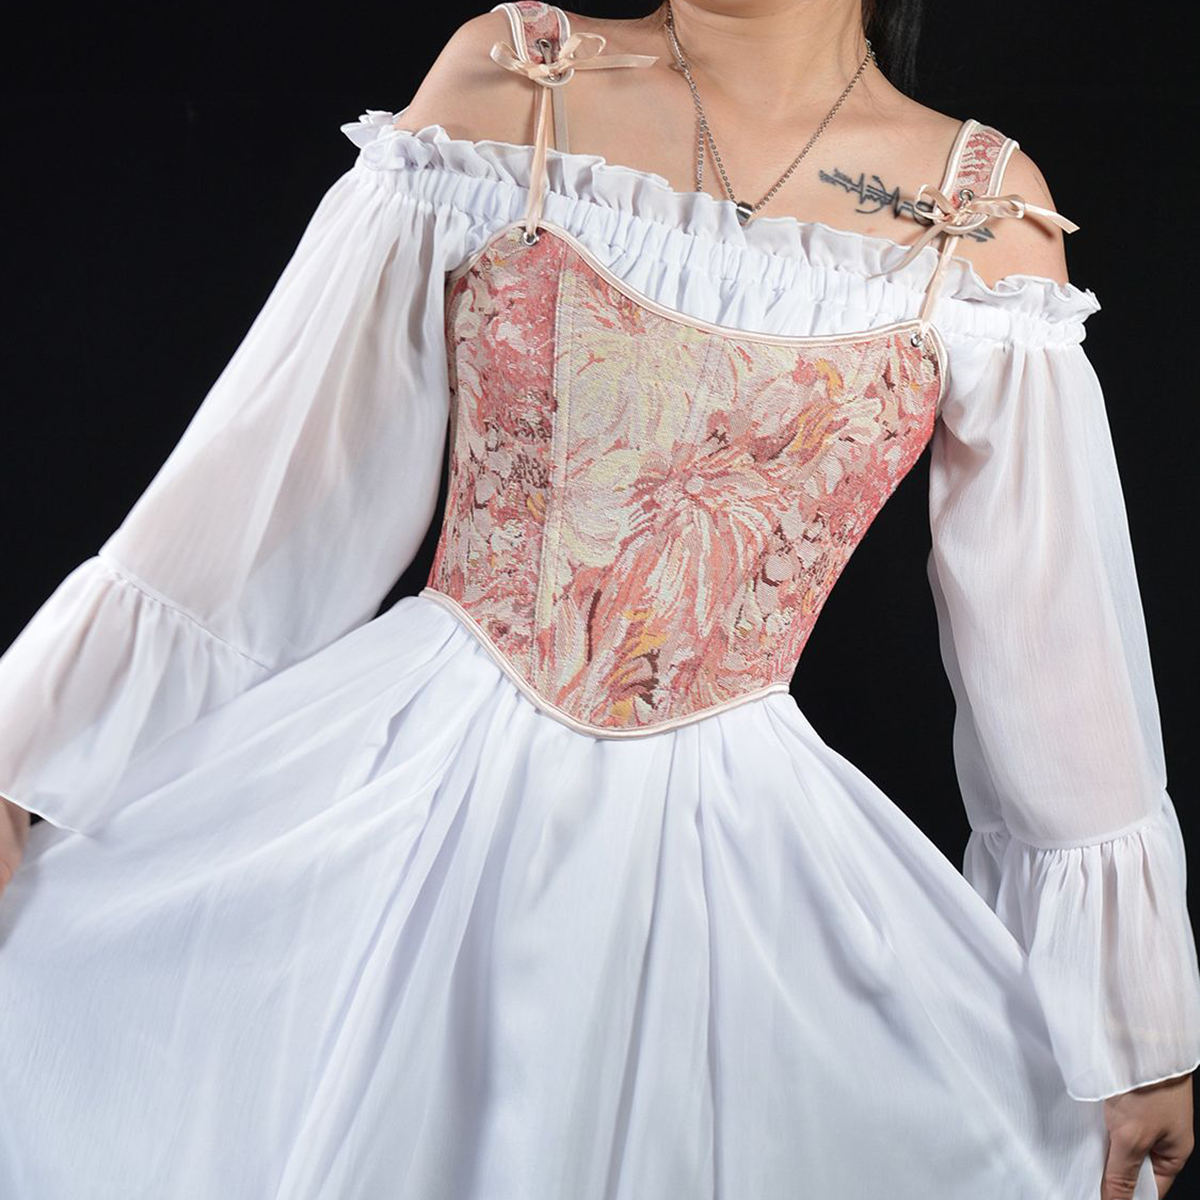 Renaissance bustier corset